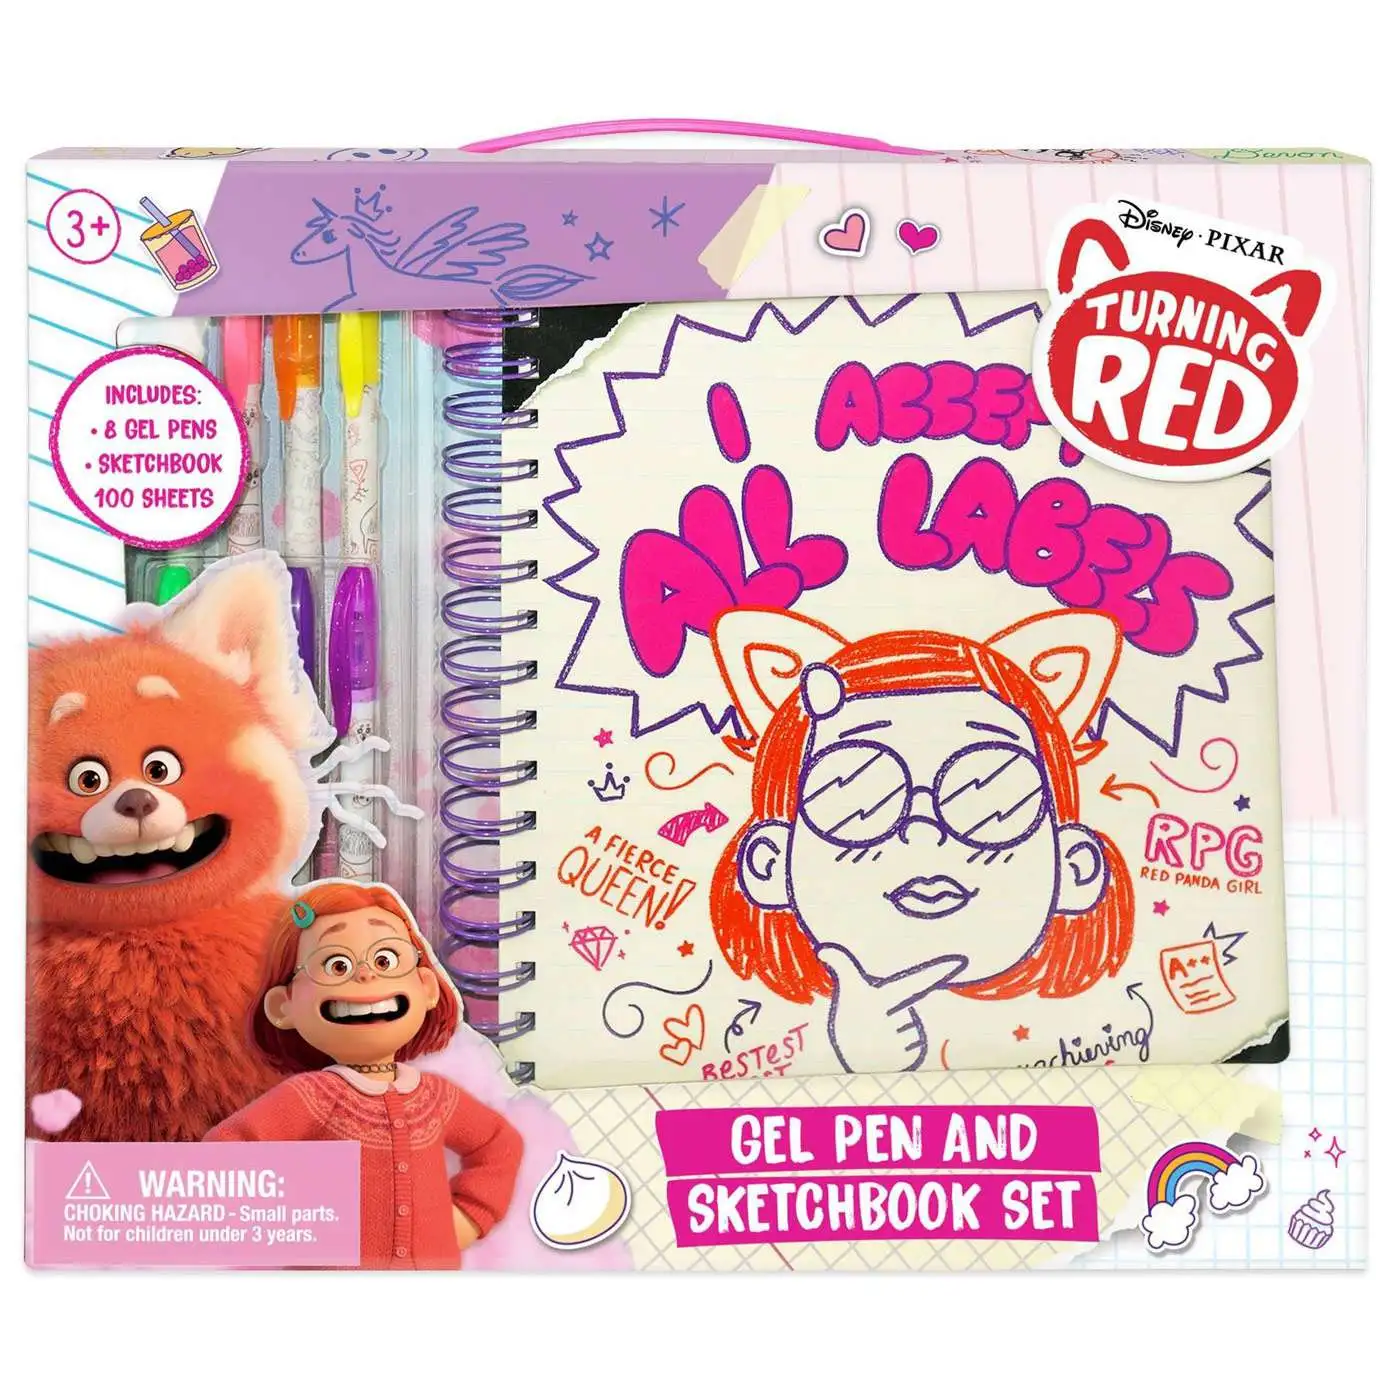 Sketchbook: Panda Unicorn Sketch Book for Kids - Practice Drawing